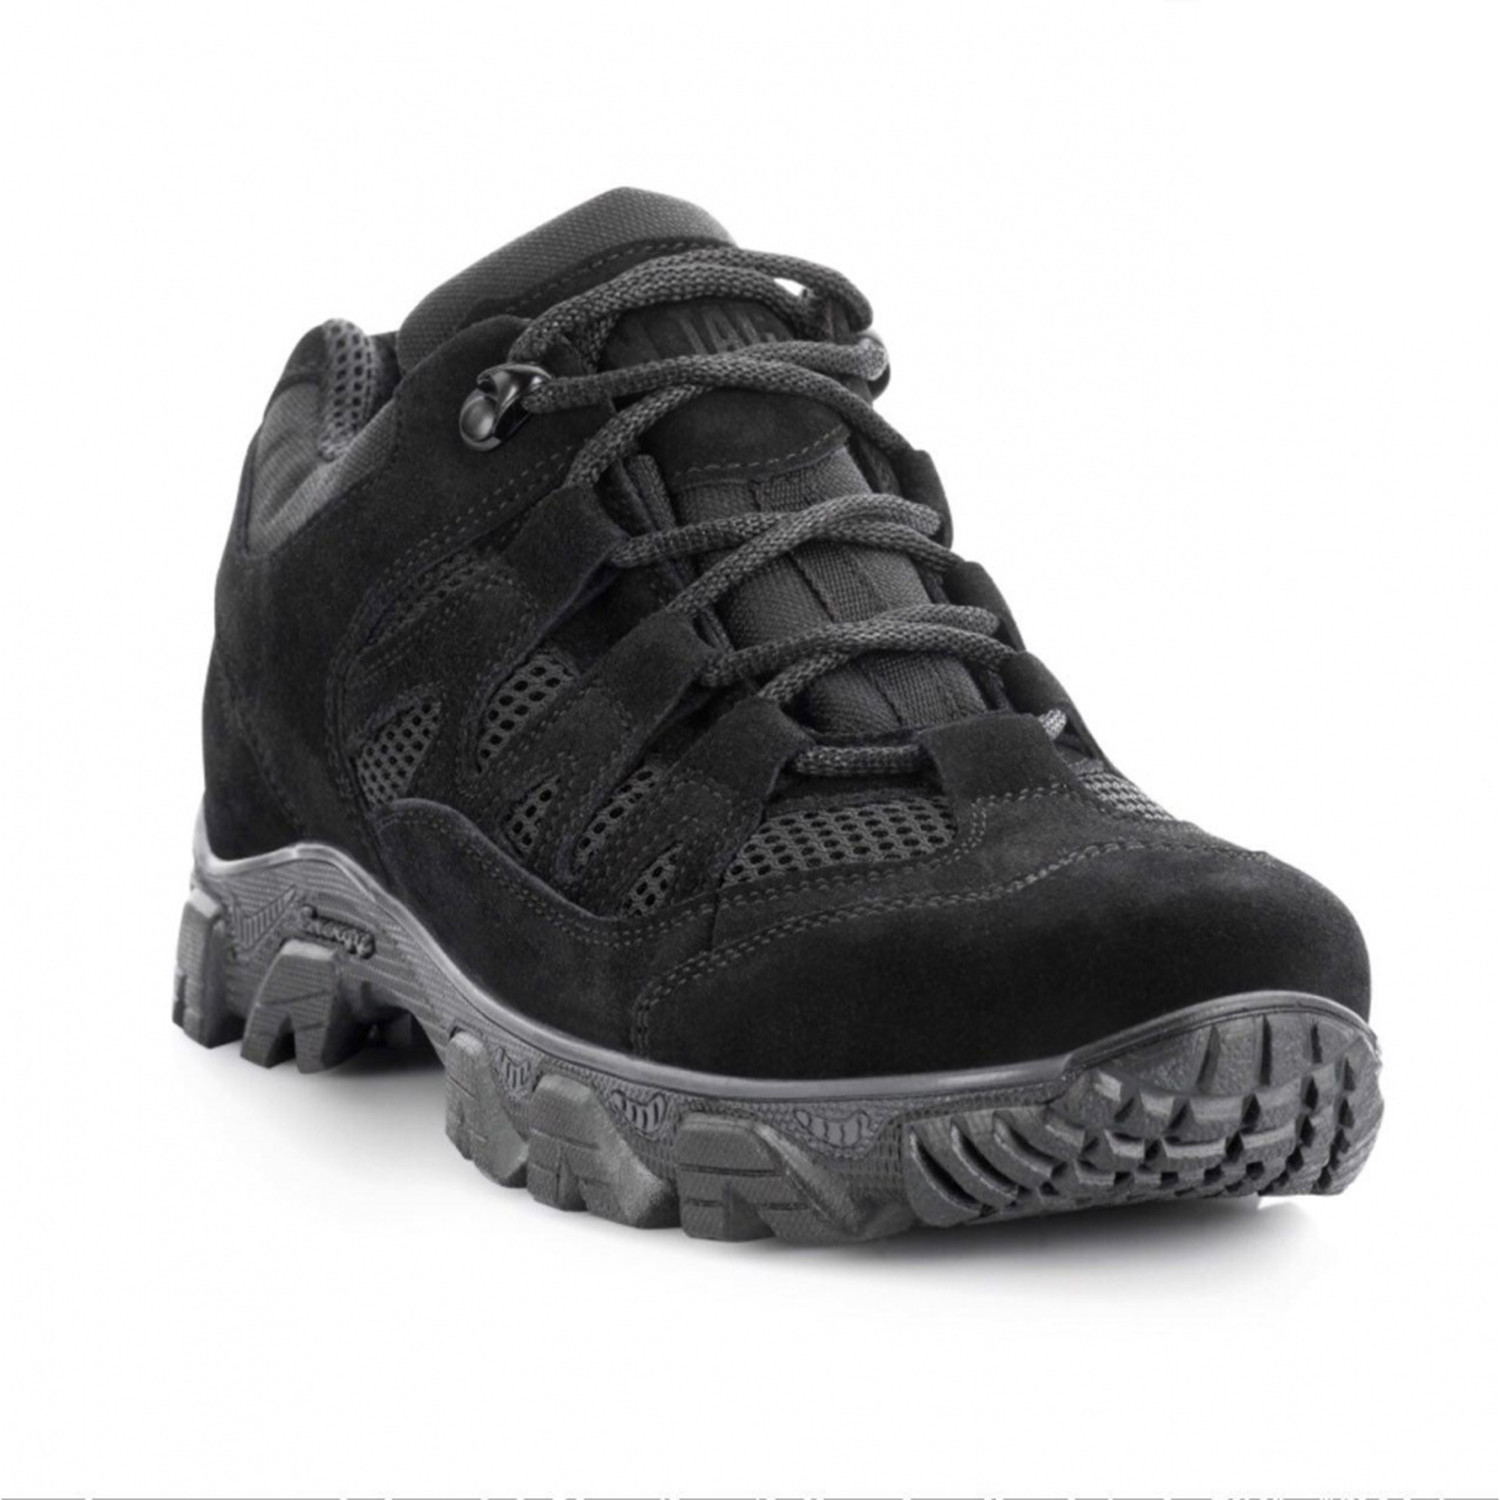 Mount Kilimanjaro Low-Top Tactical Shoes // Black (Euro: 37) - M 